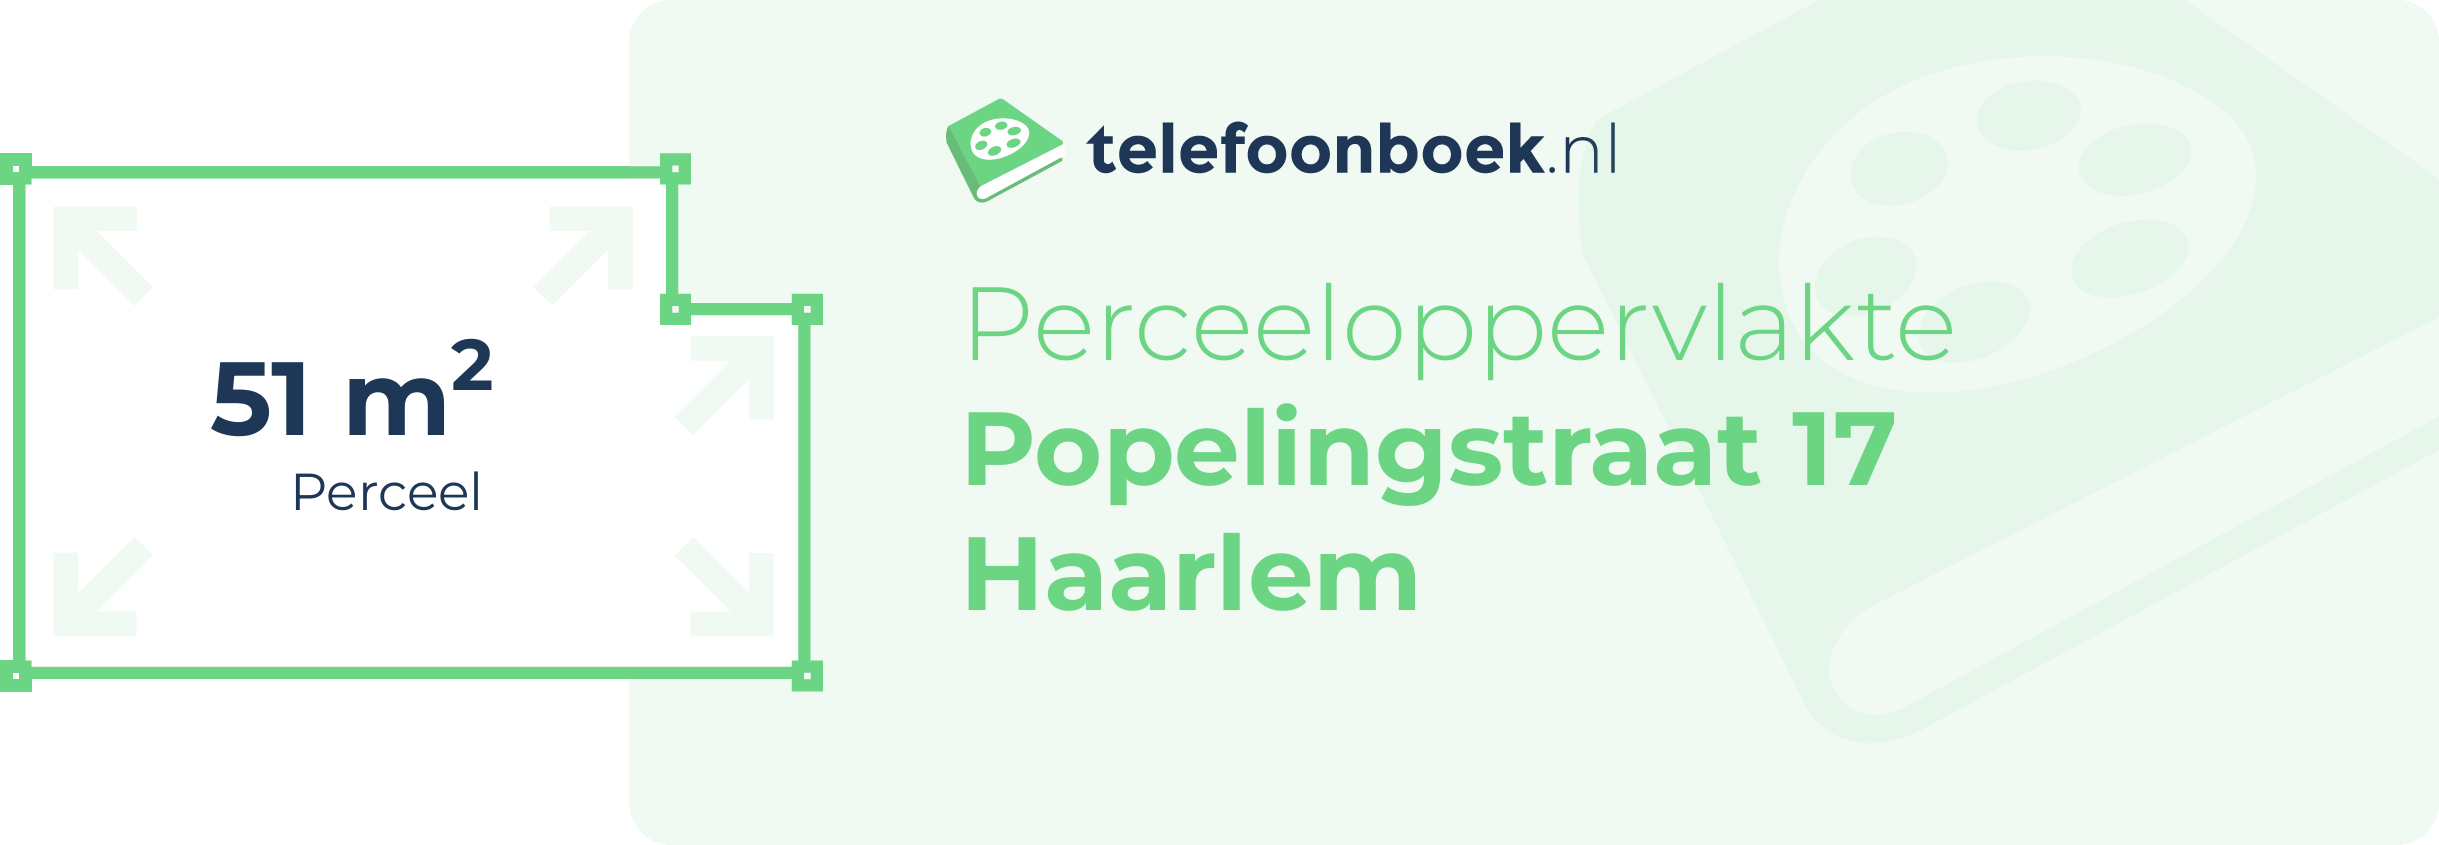 Perceeloppervlakte Popelingstraat 17 Haarlem